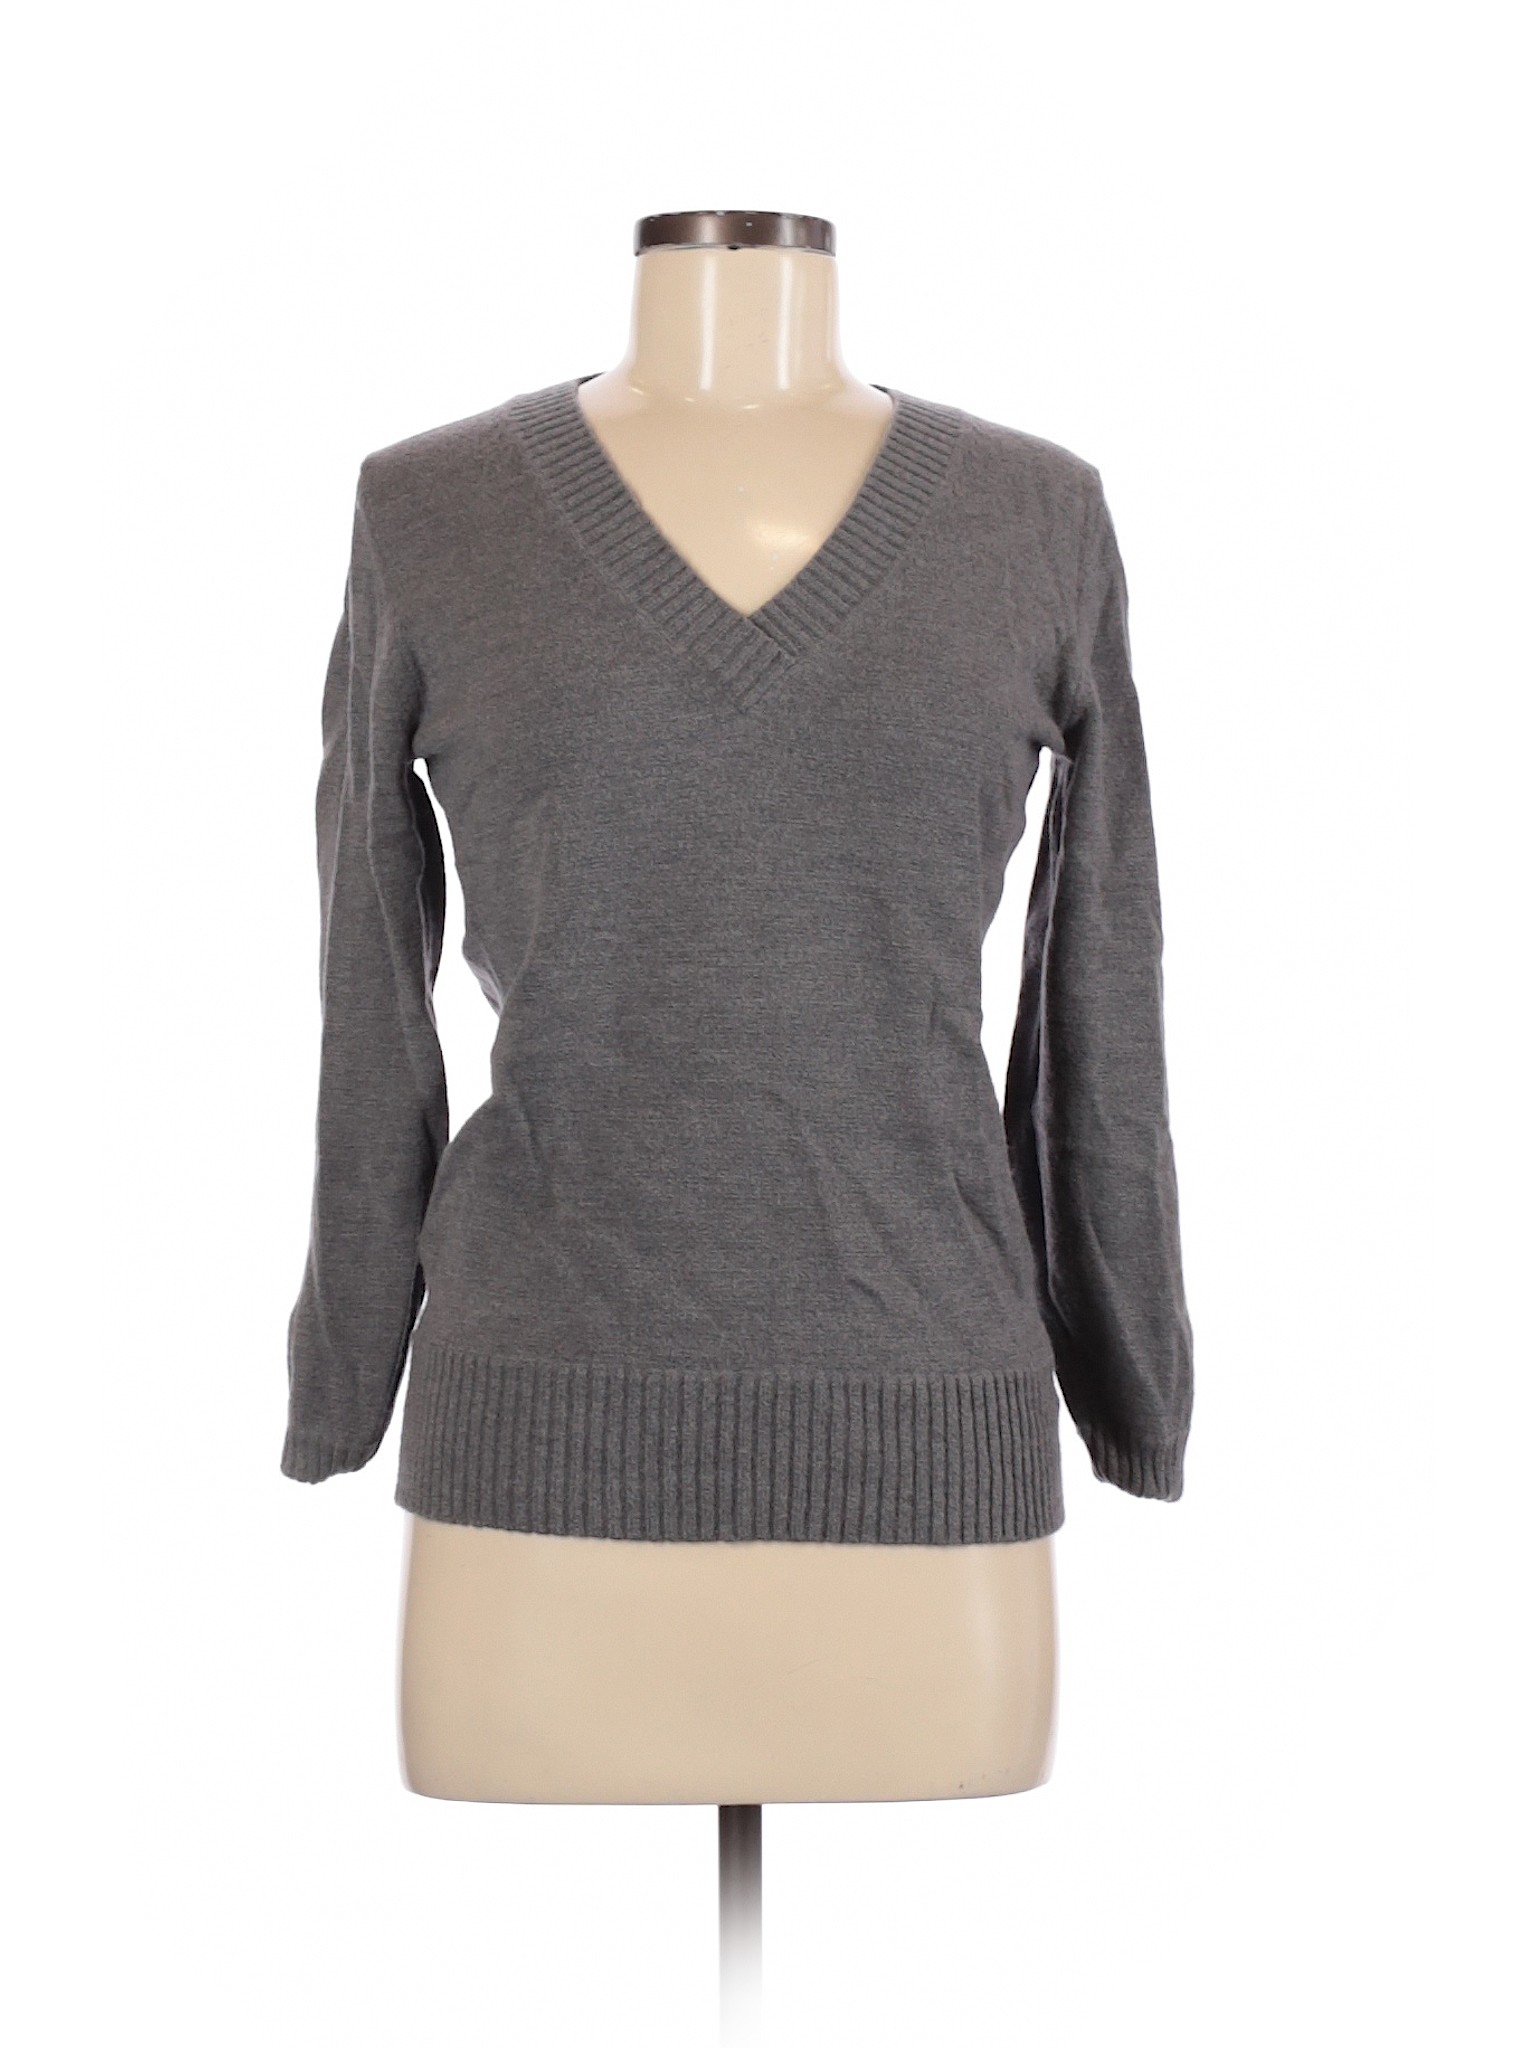 Banana Republic Women Gray Wool Pullover Sweater M | eBay